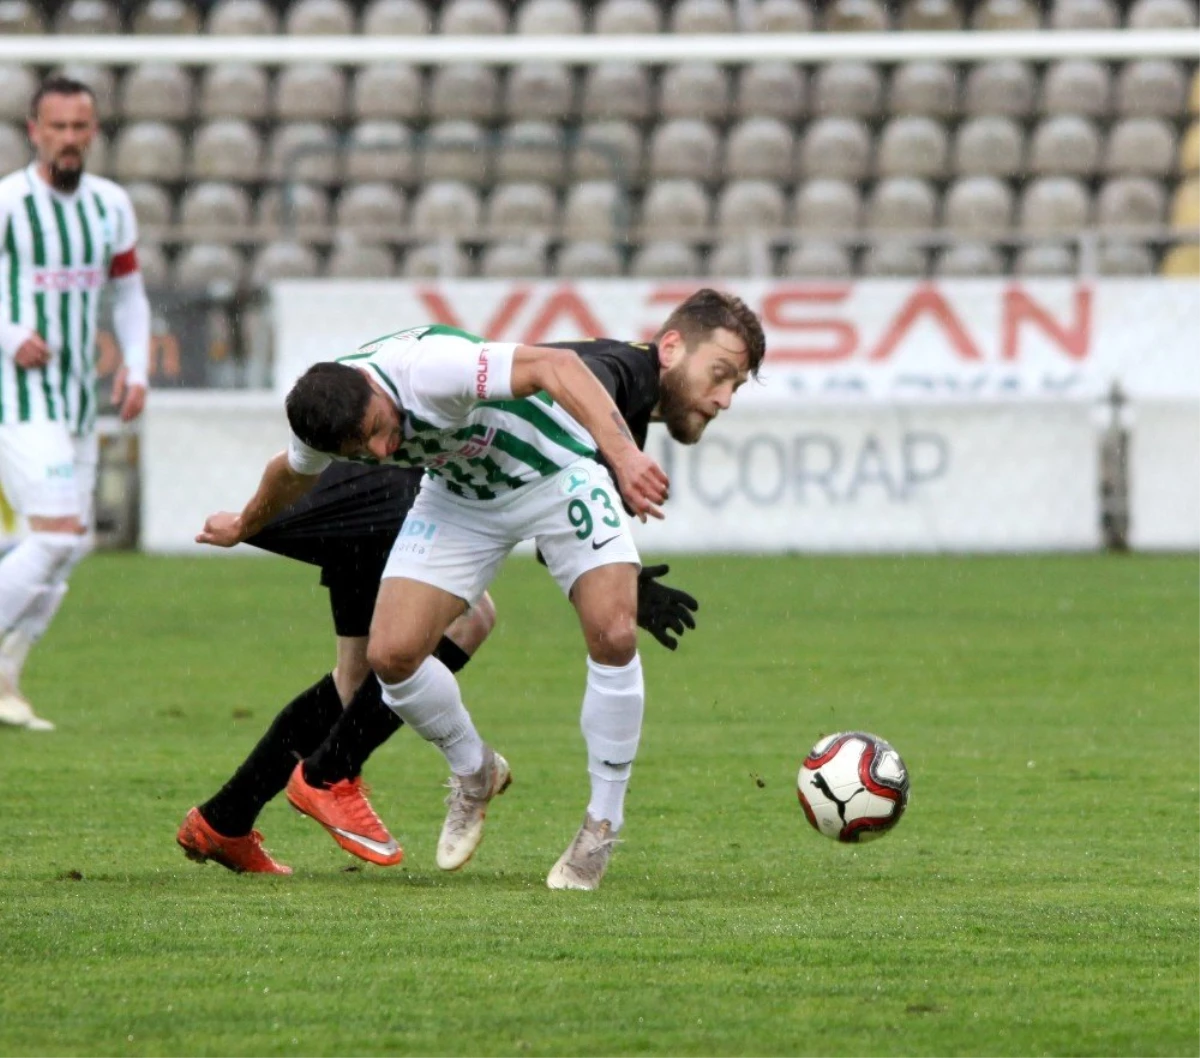 Spor Toto 1. Lig: Giresunspor: 0 - İstanbulspor: 0